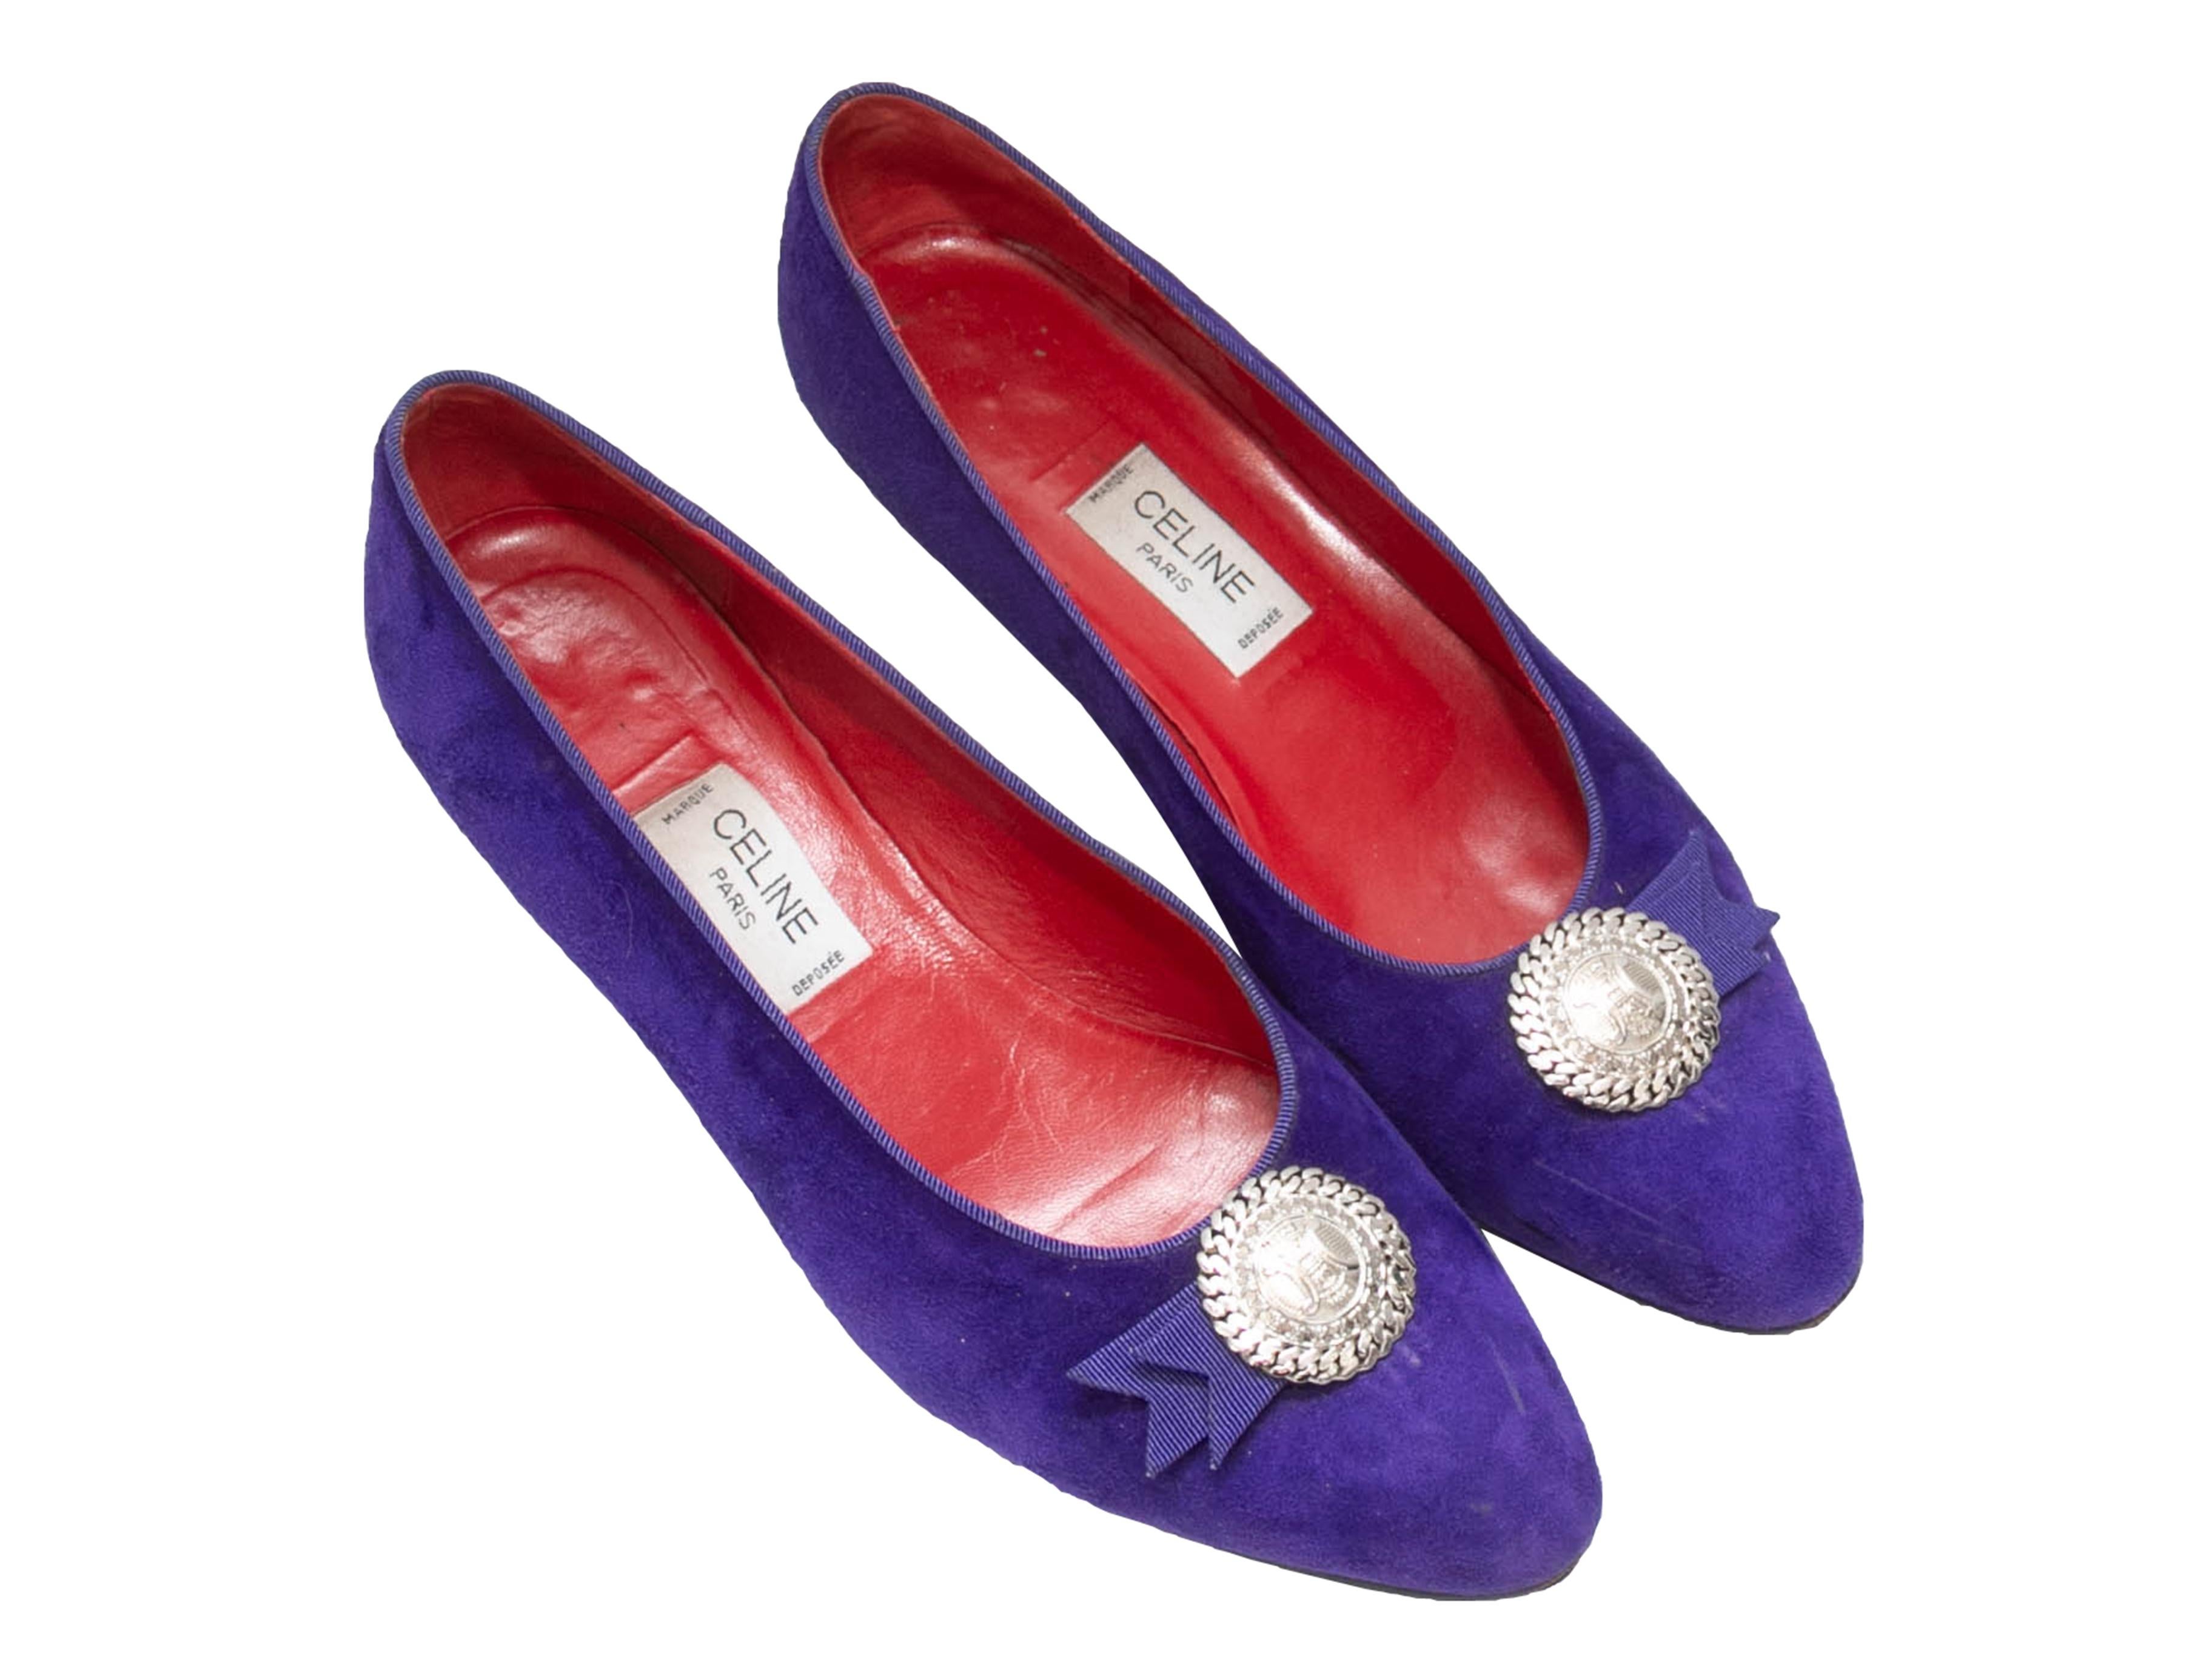 Vintage purple suede ballet flats by Celine. Grosgrain trim. Silver-tone medallion accents at tops. 1.5